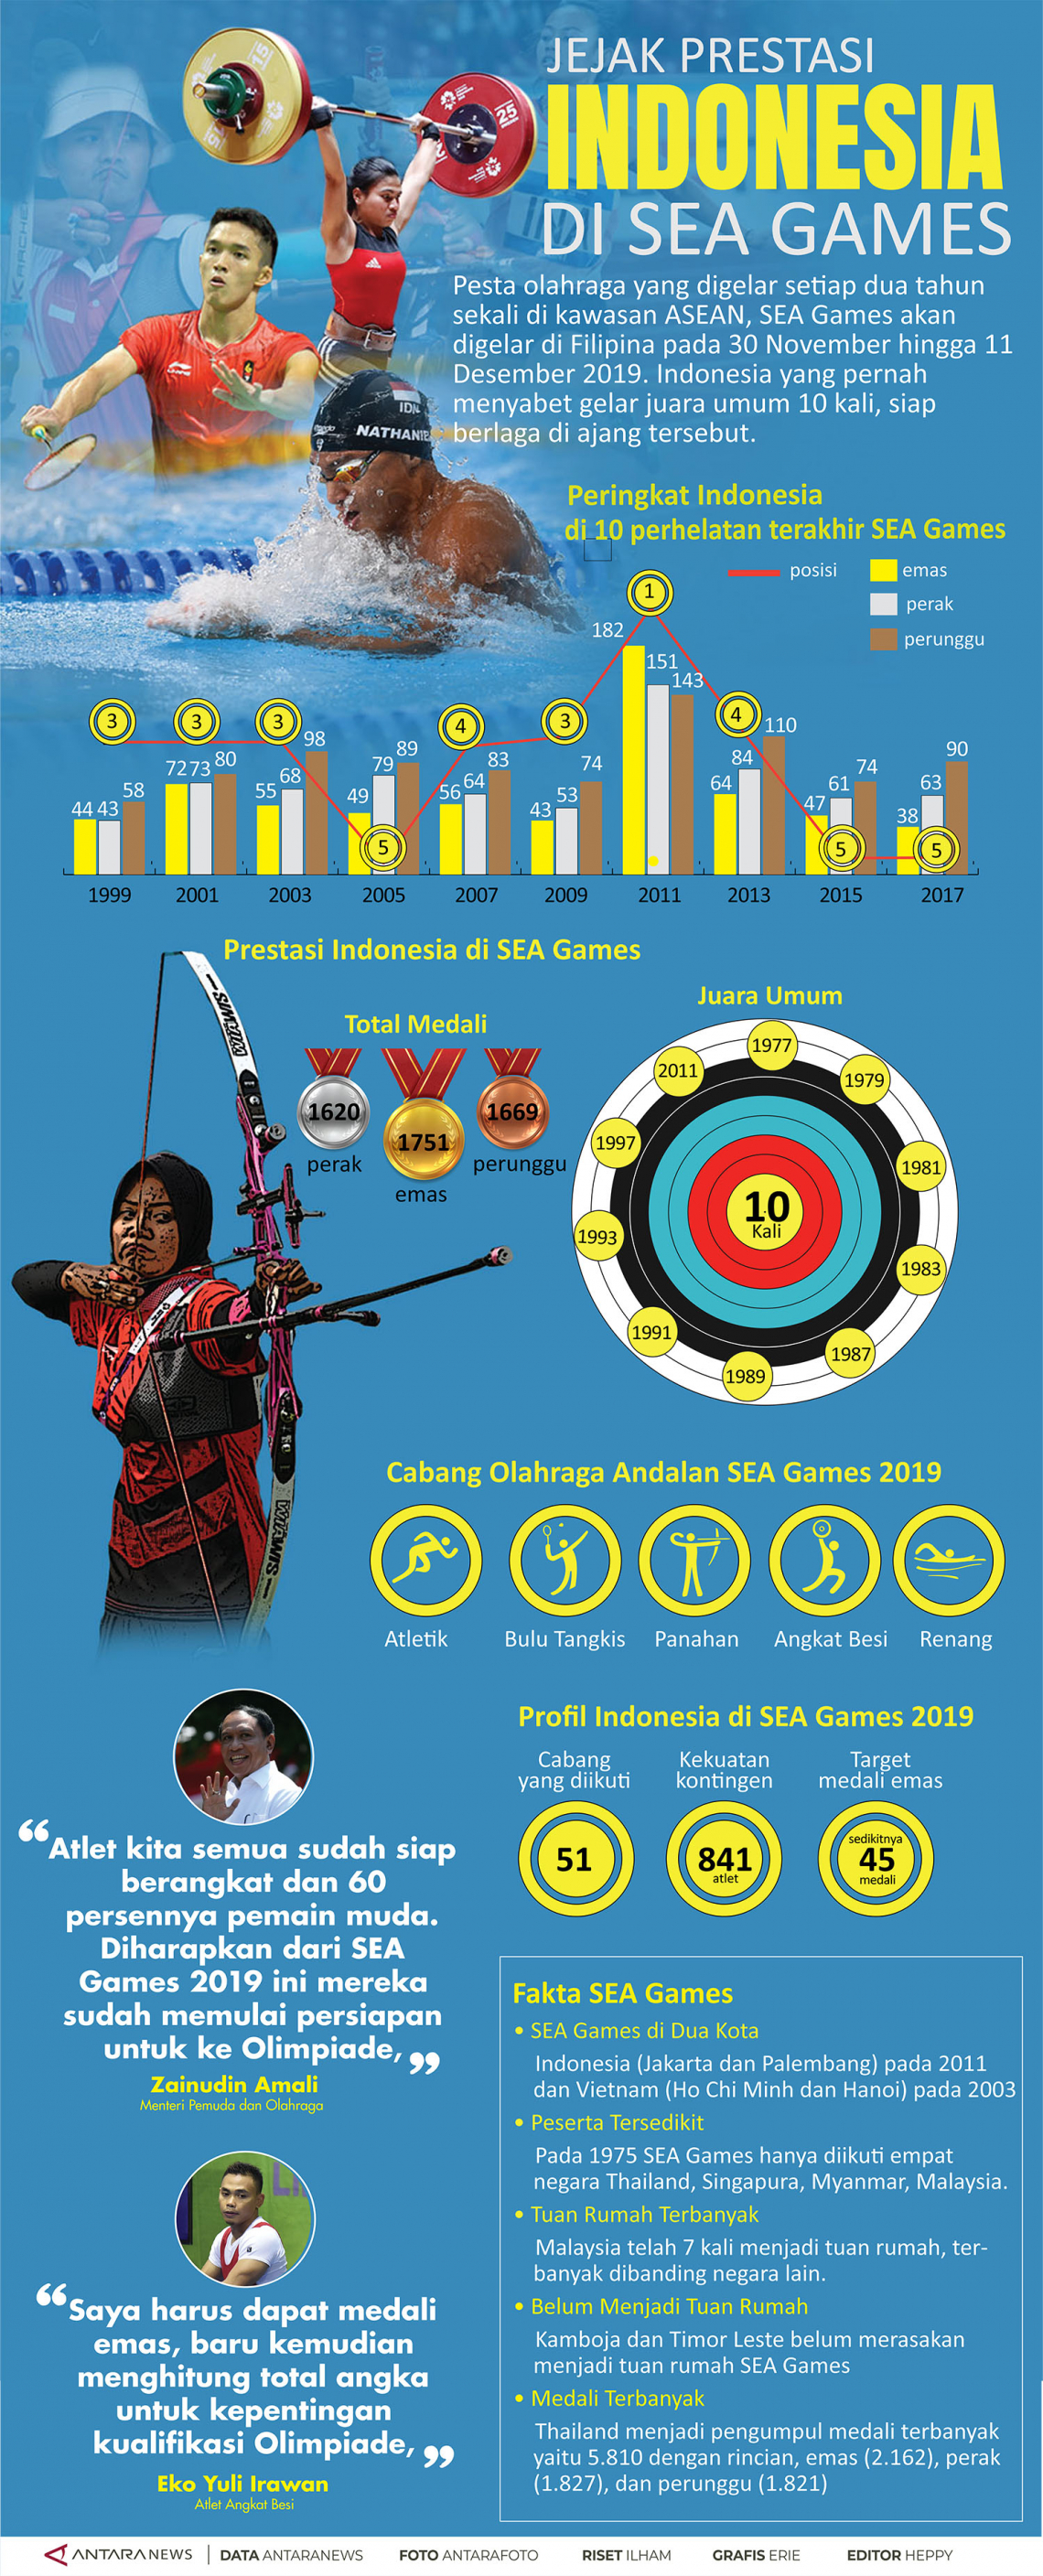 Jejak prestasi Indonesia di SEA Games